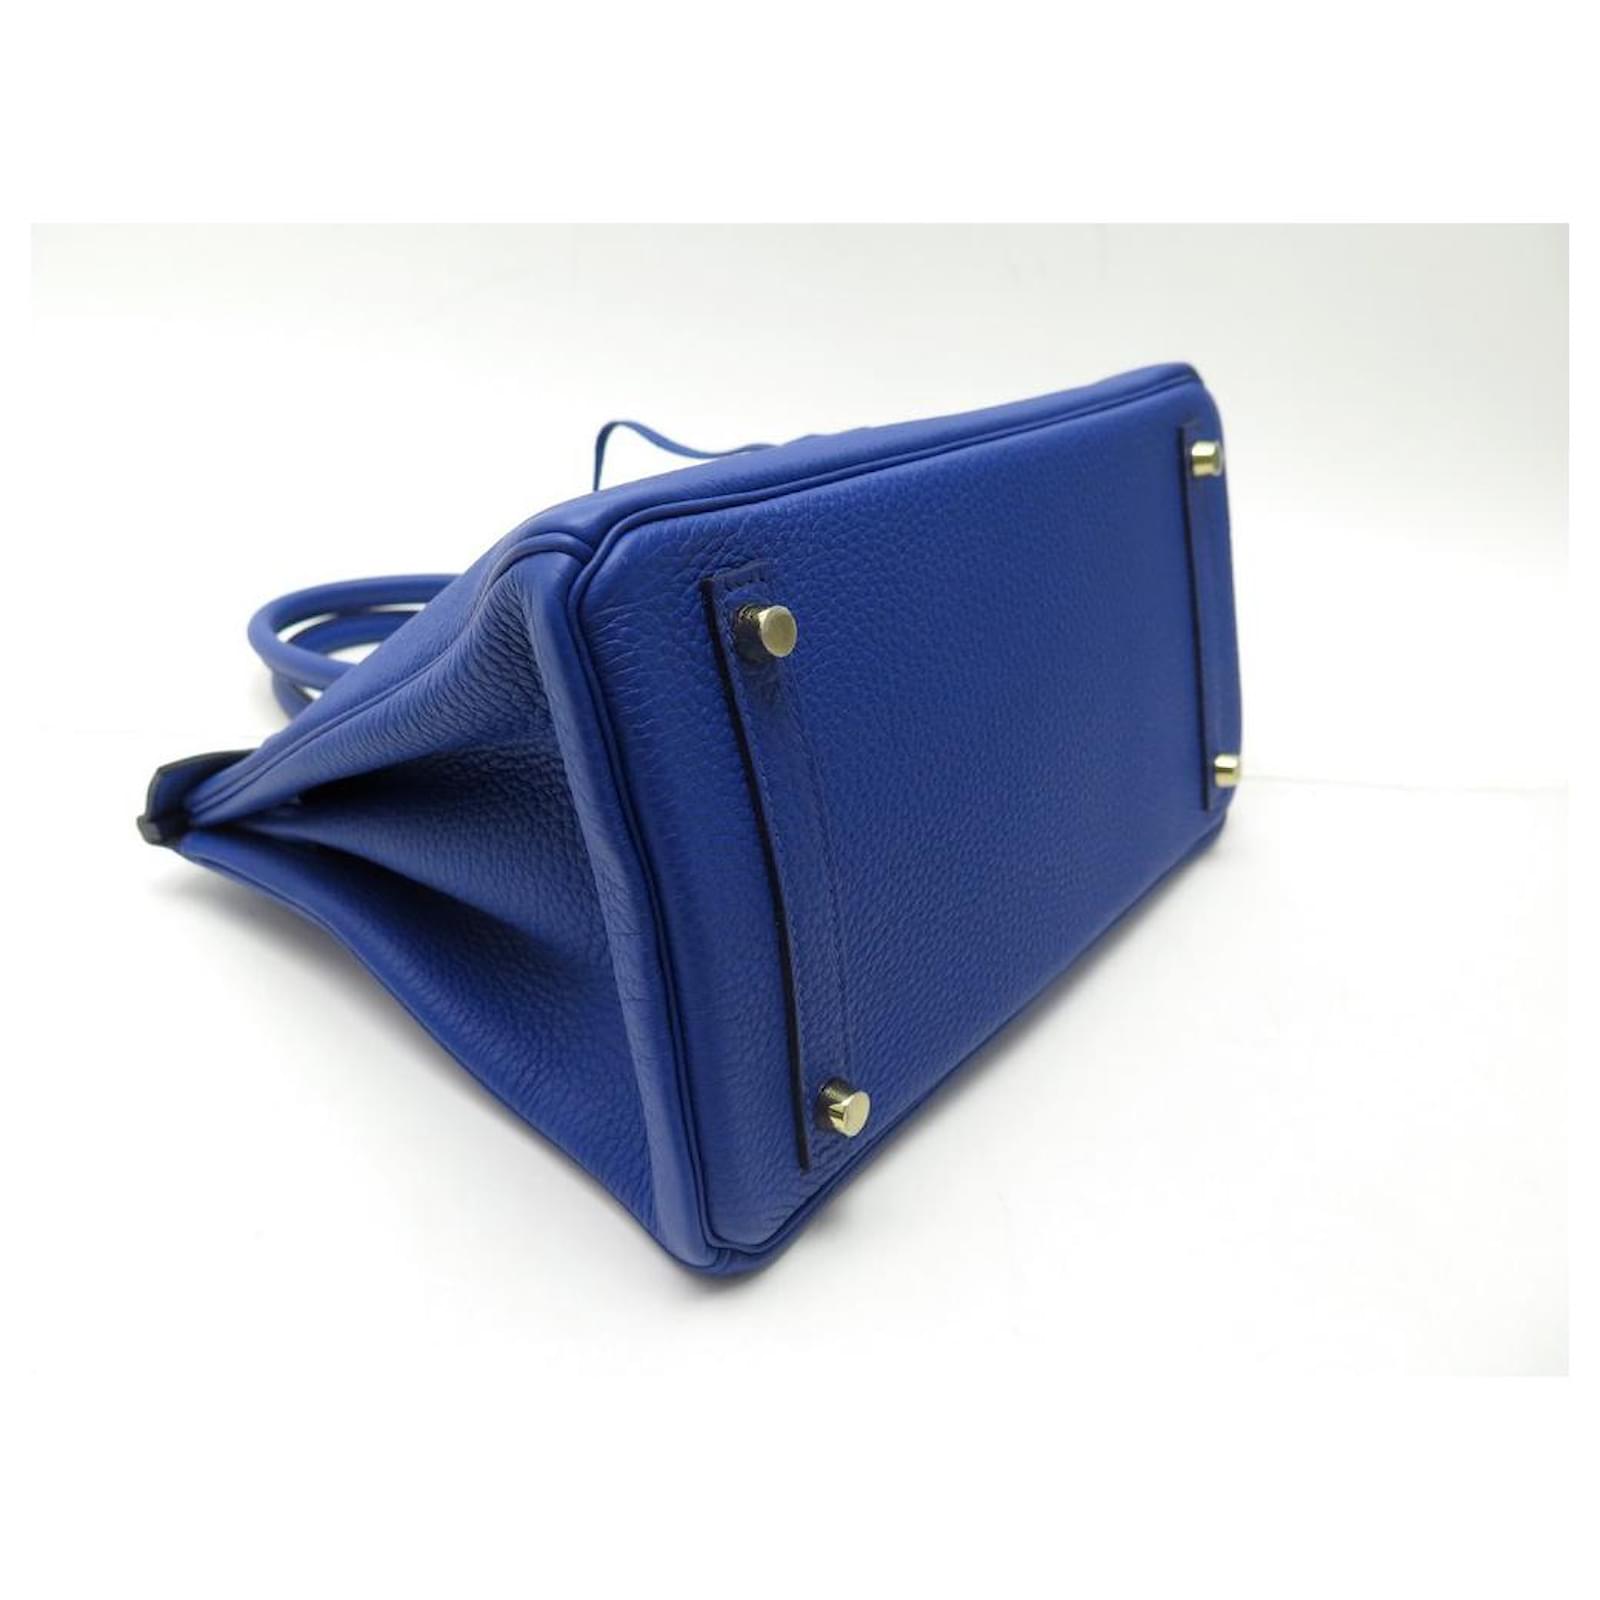 Handbags Hermès New Hermes Birkin Handbag 30 Royal Blue Togo Leather New Leather Purse Hand Bag